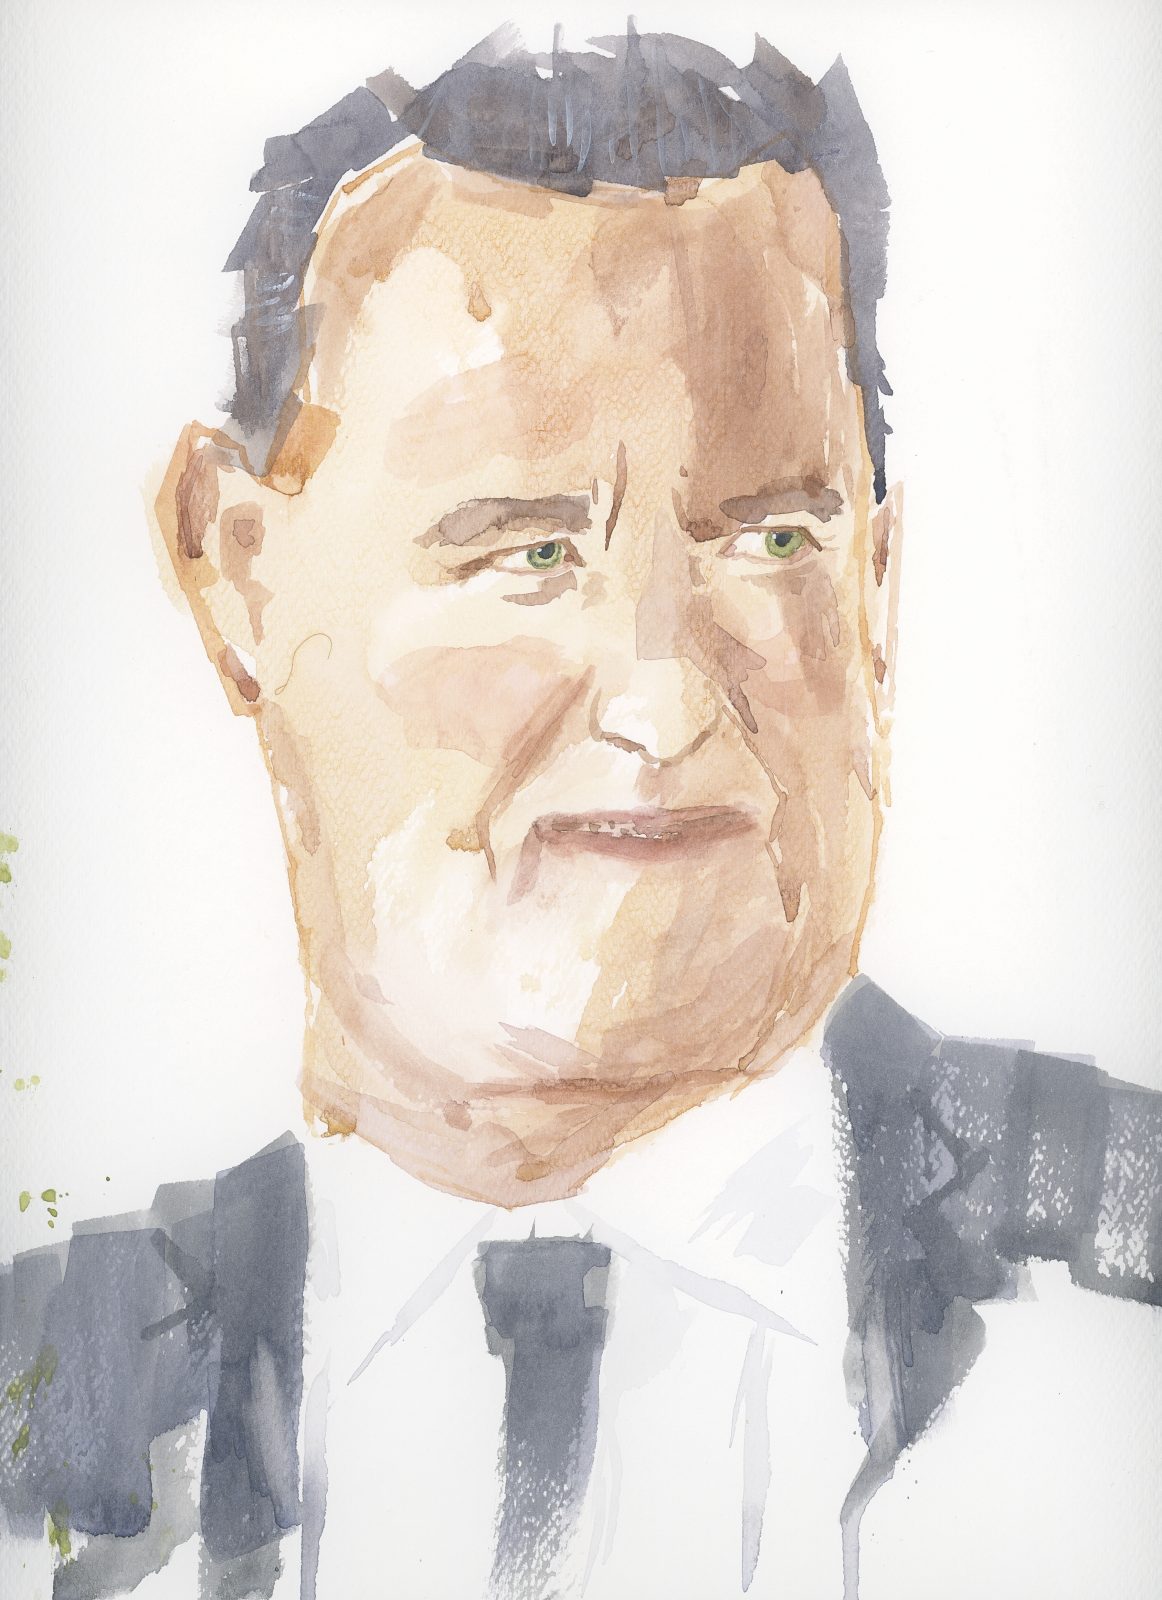 Watercolor portrait of Tom Hanks, February 2022